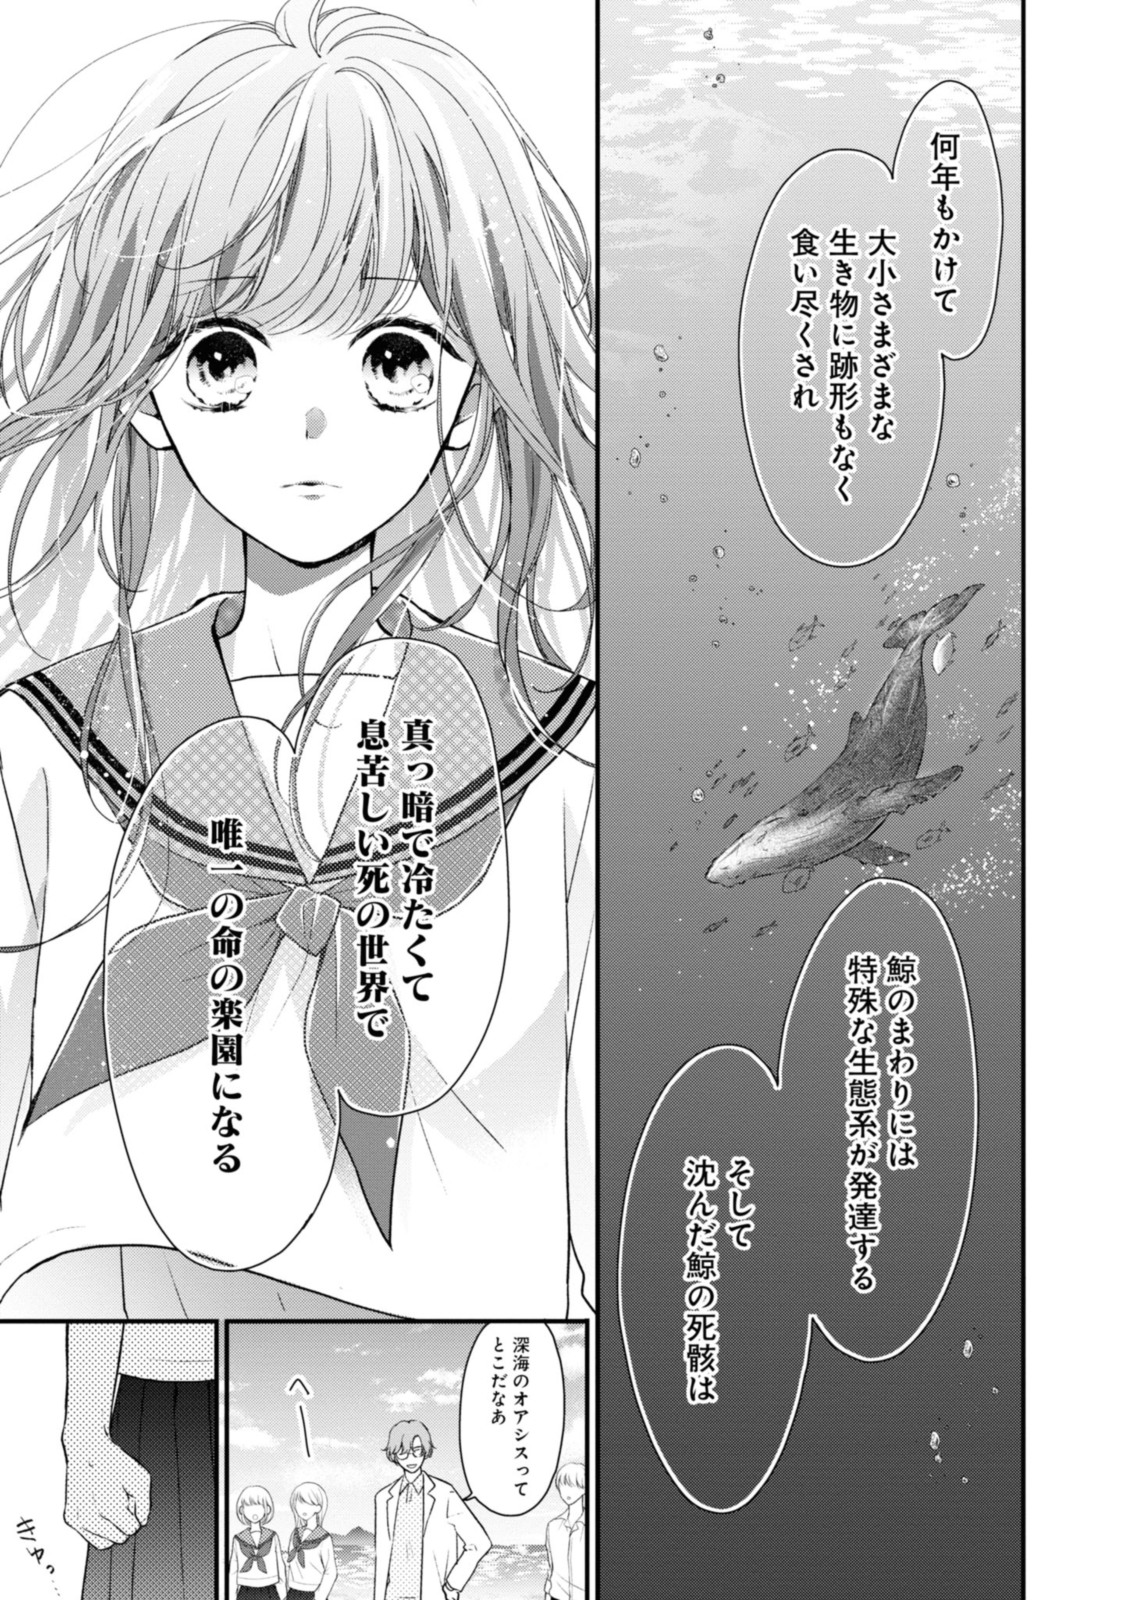 Goodbye Liar Little Mermaid さよなら嘘つき人魚姫 第1.2話 - Page 2